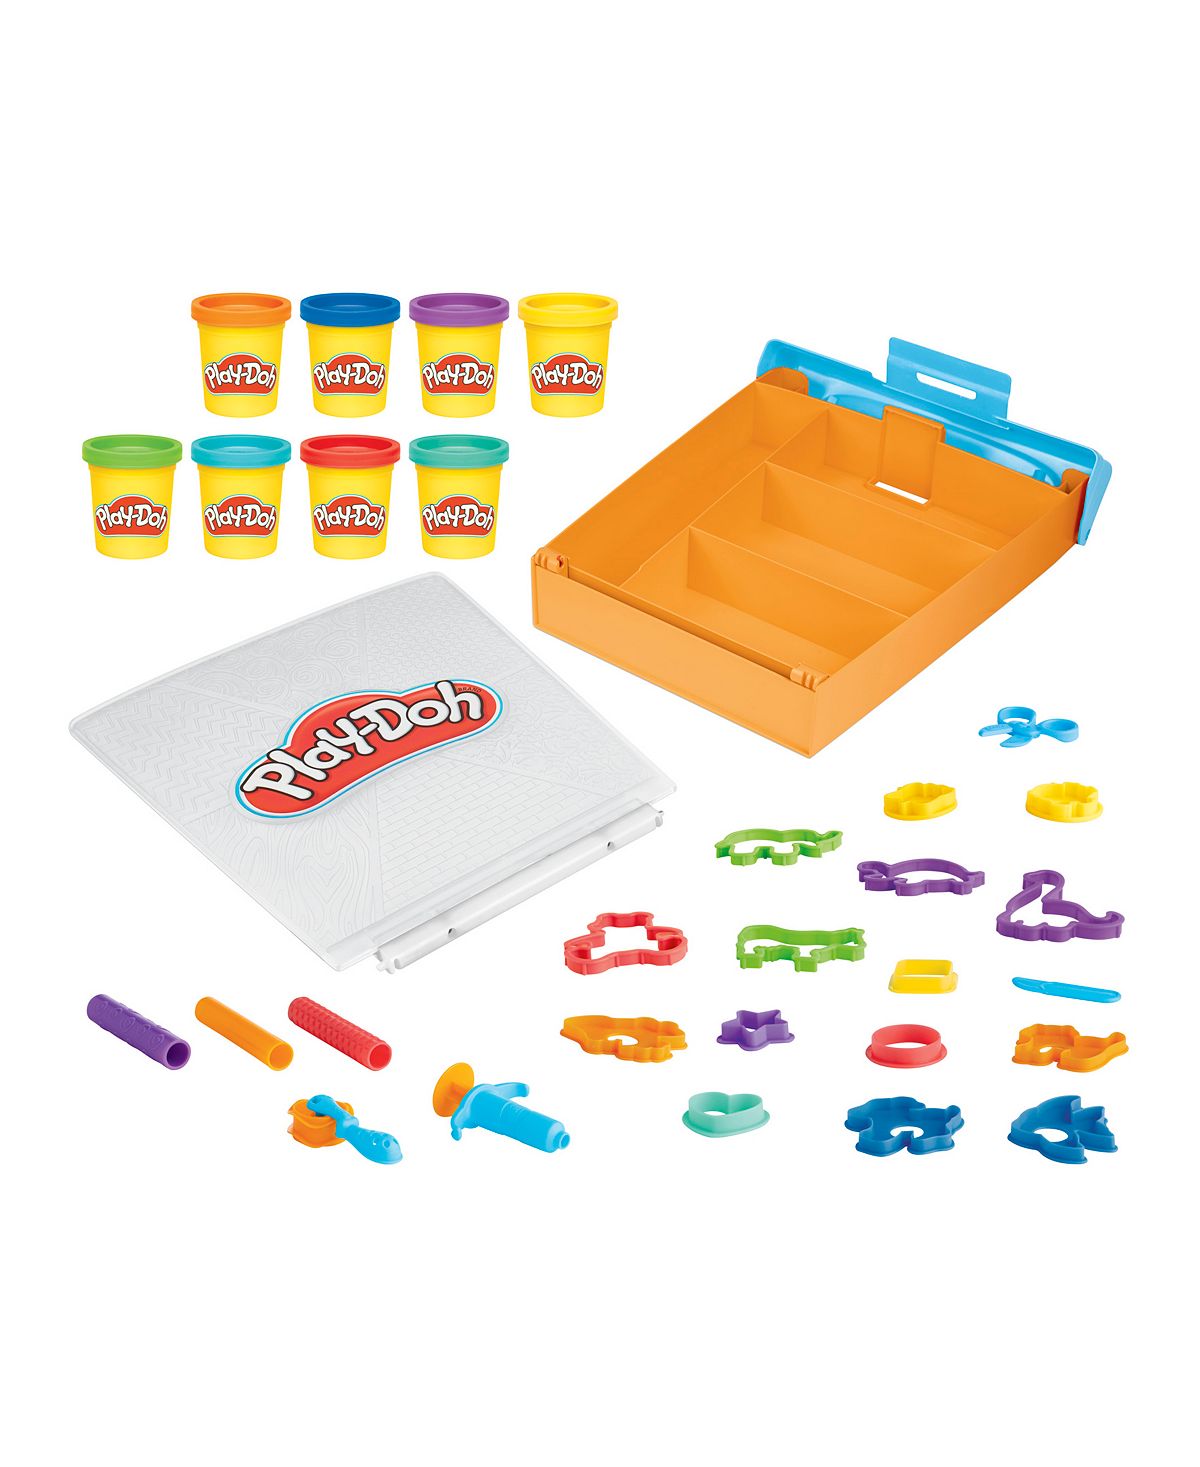 Play-Doh Imagine Animals Storage Set - Creative Modeling Compound Kit